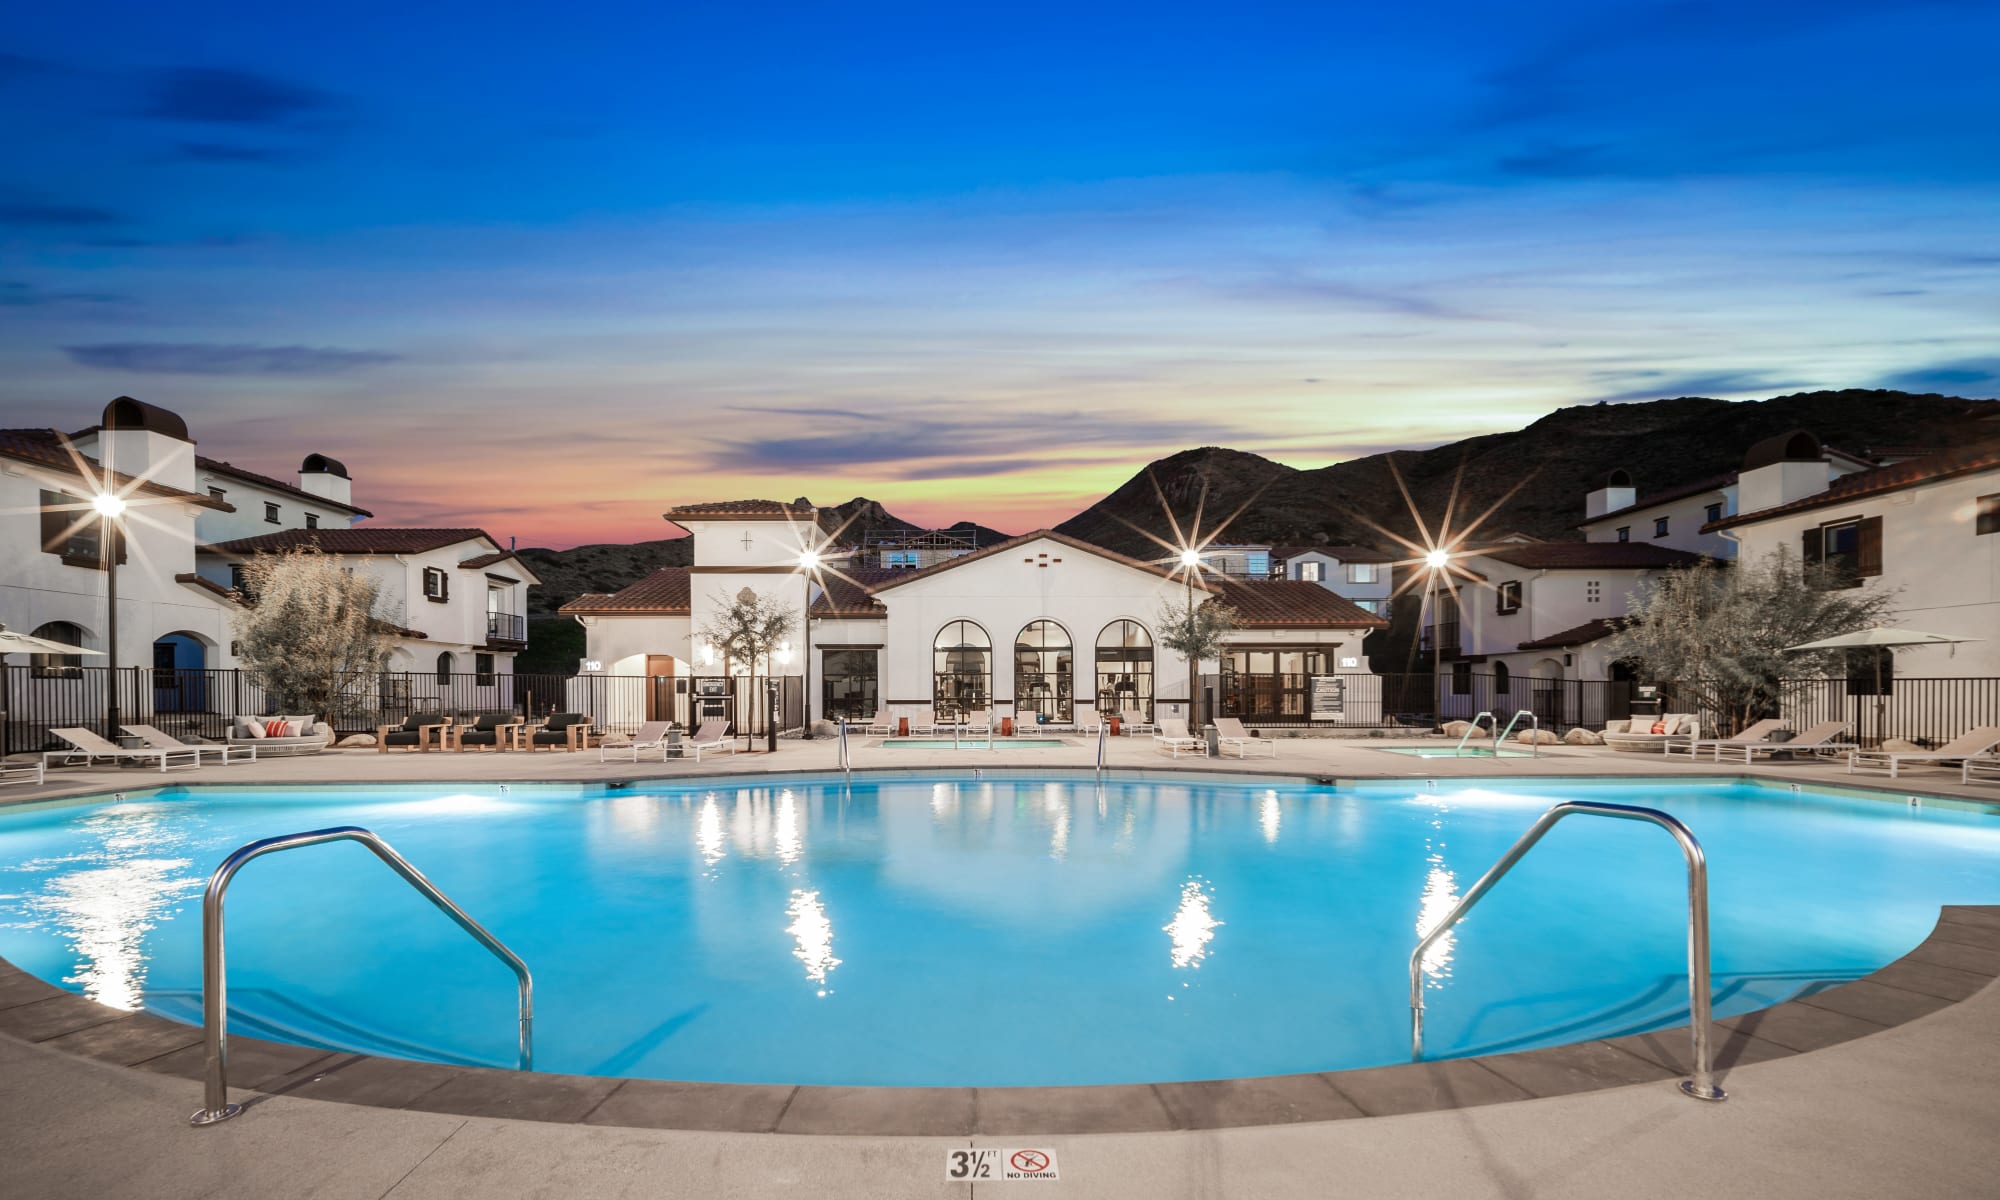 A beautiful view of the pool as the sun sets at The Villas at Anacapa Canyon in Camarillo, California